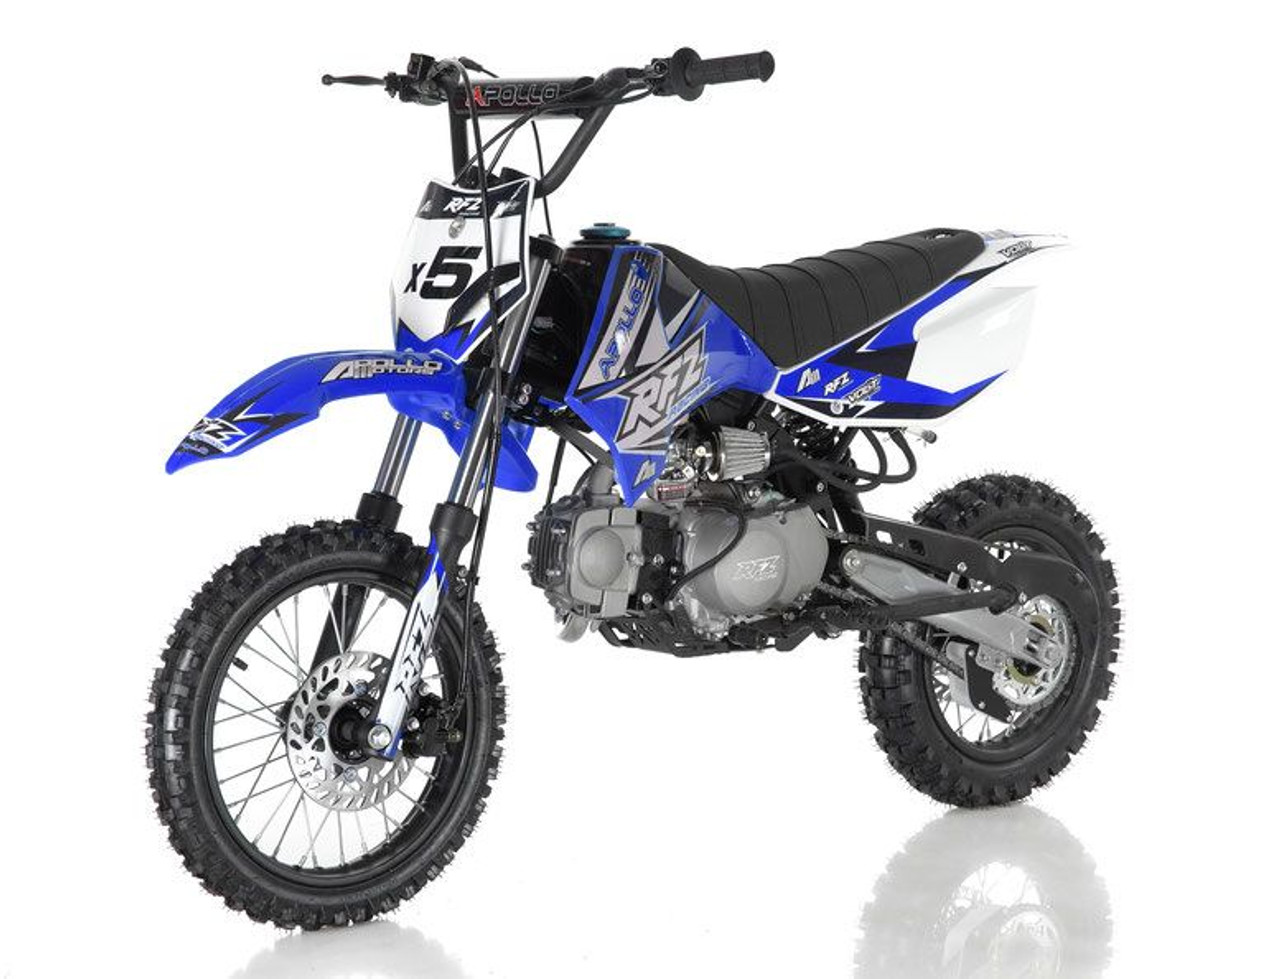 APOLLO DB-X5 125cc (Twin-Spare Tubular Frame) MANUAL SHIFT Dirt Bike, 4 stroke, Single Cylinder - BLUE